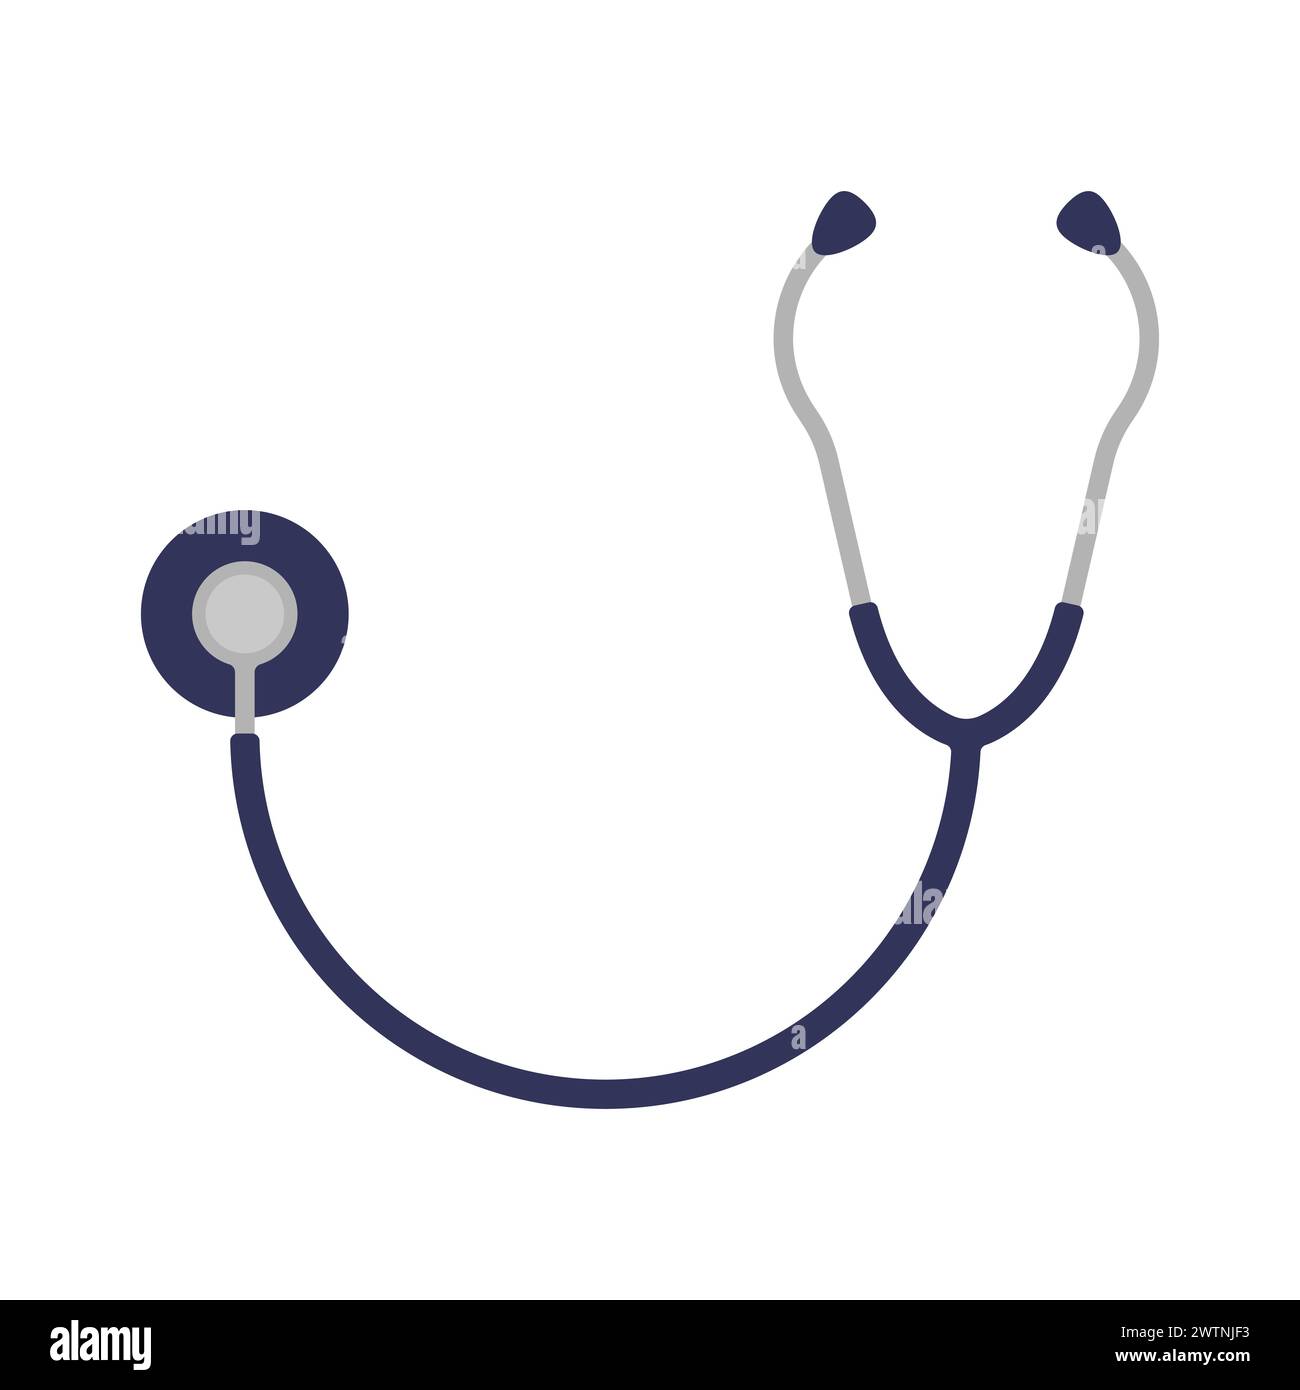 Stethoskop Vektor-Illustration Arzt Stethoskop Icon Medizinische Stethoskop Illustration Gesundheitspflege Produzieren Stock Vektor